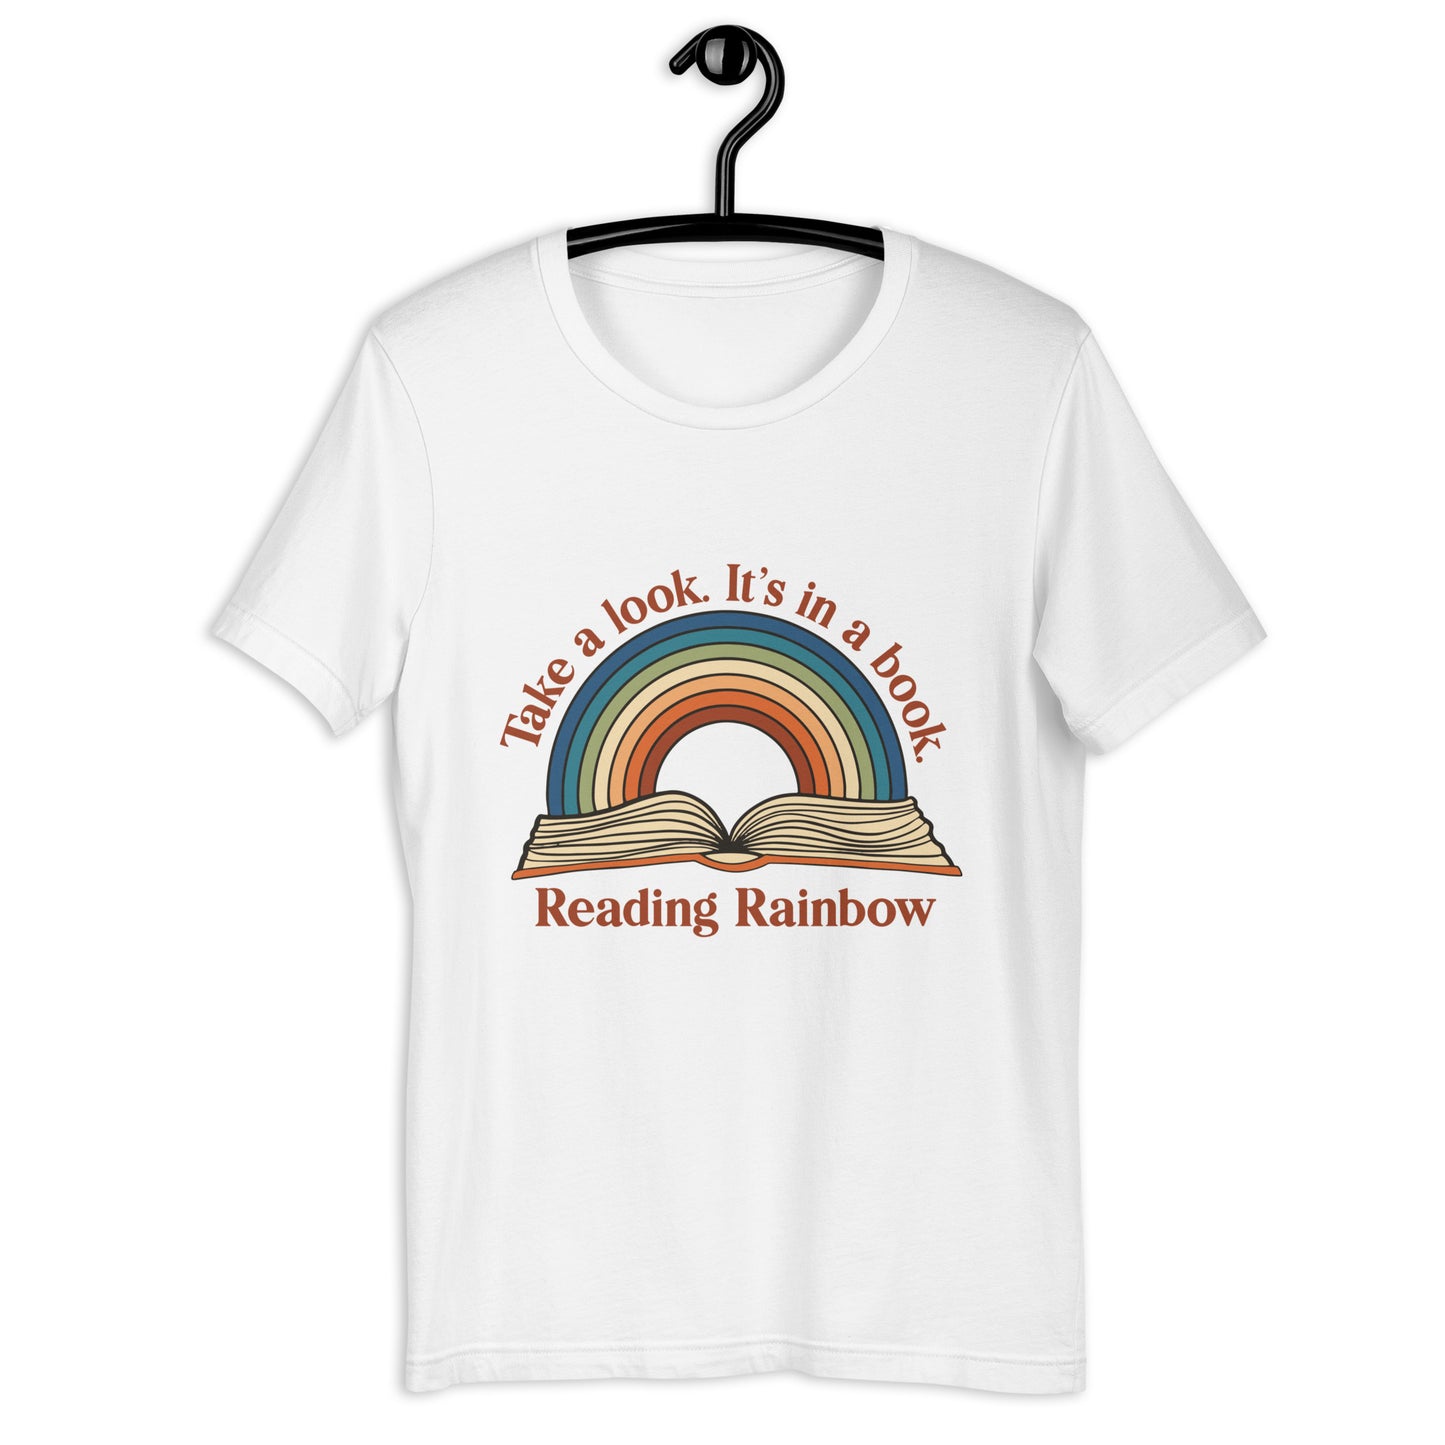 Reading Rainbow Shirt